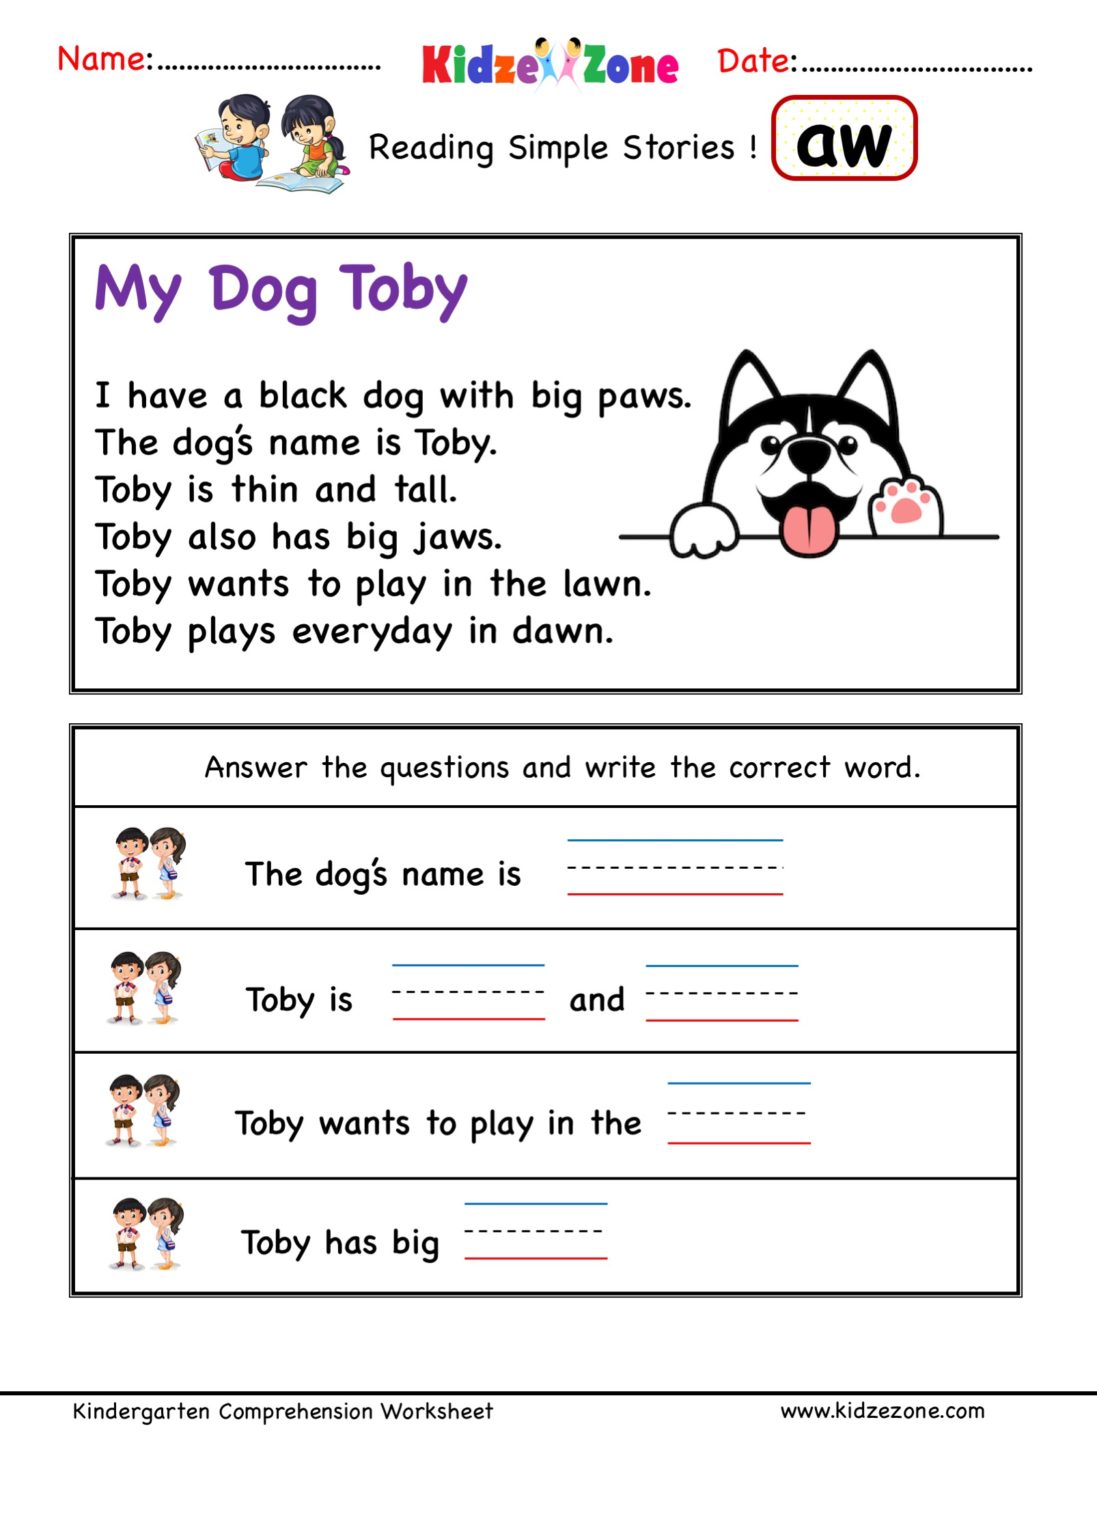 kindergarten-worksheets-aw-word-family-reading-comprehension